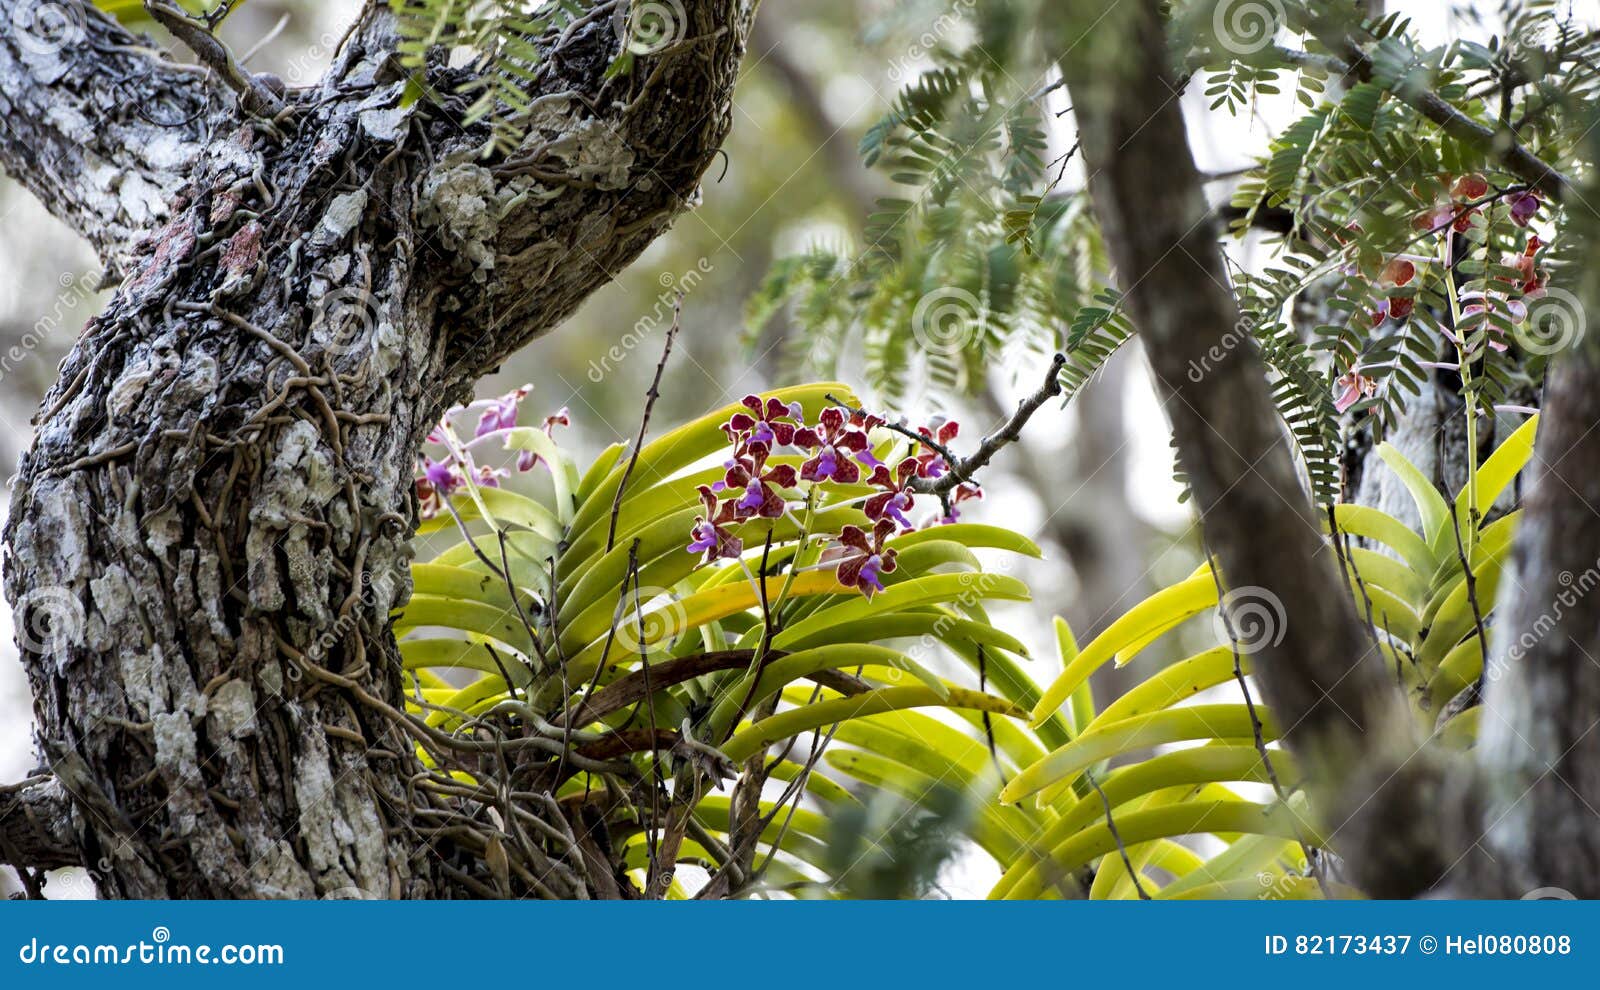 wild orchids on tree, komodo island, indonesia